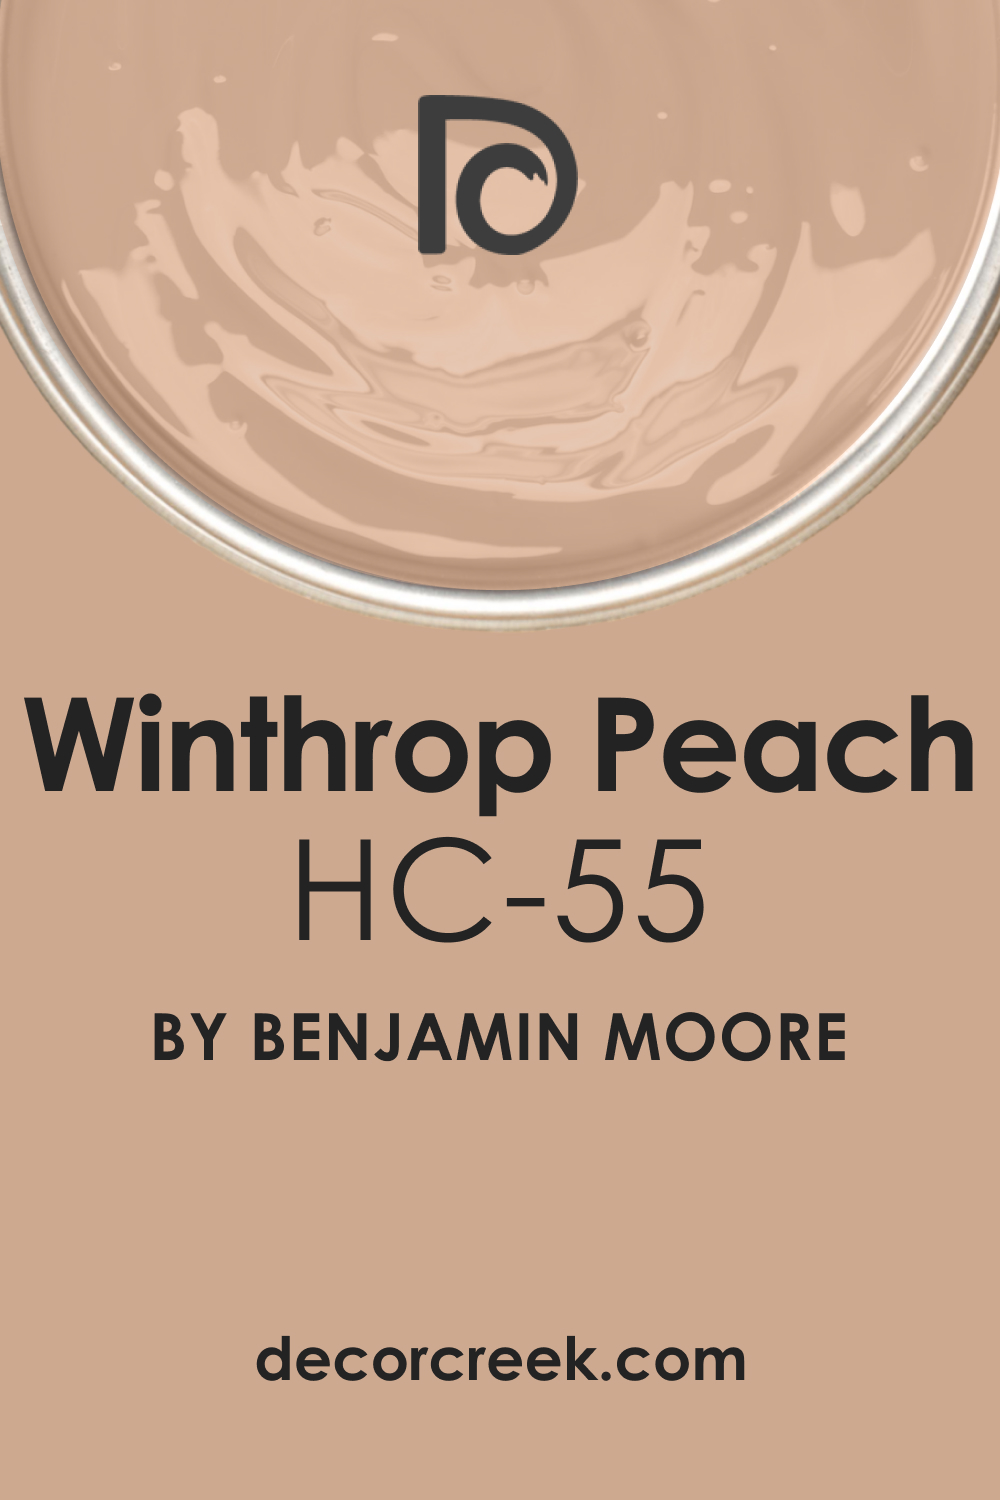 Winthrop Peach HC-55 Paint Color by Benjamin Moore